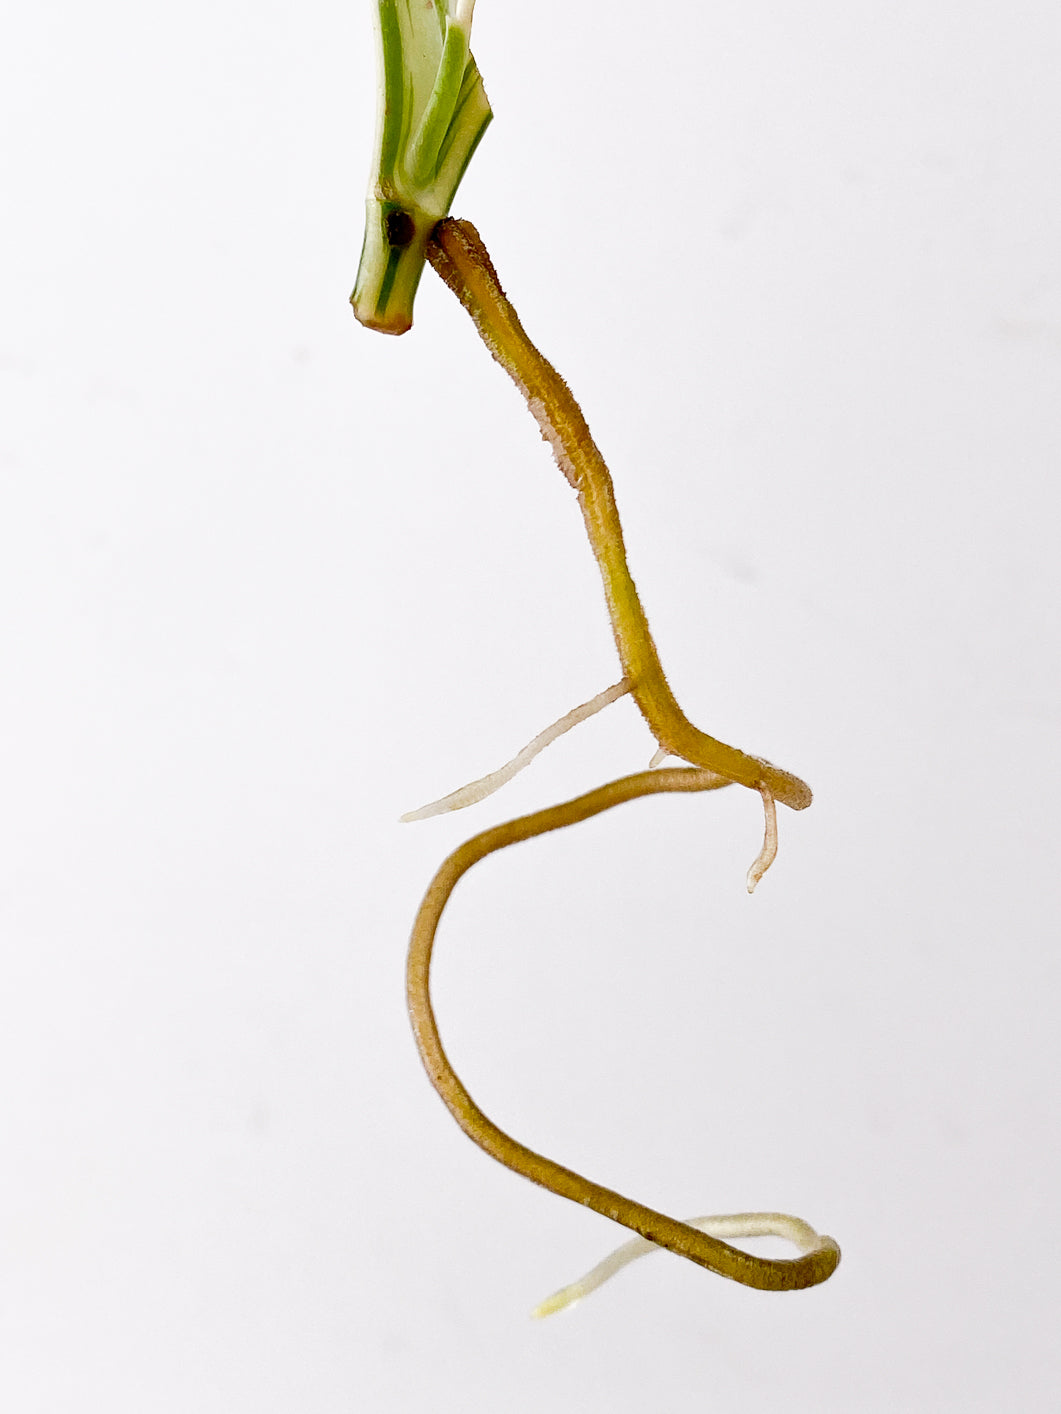 Monstera adansonii albo variegated 1 leaf 1 sprout